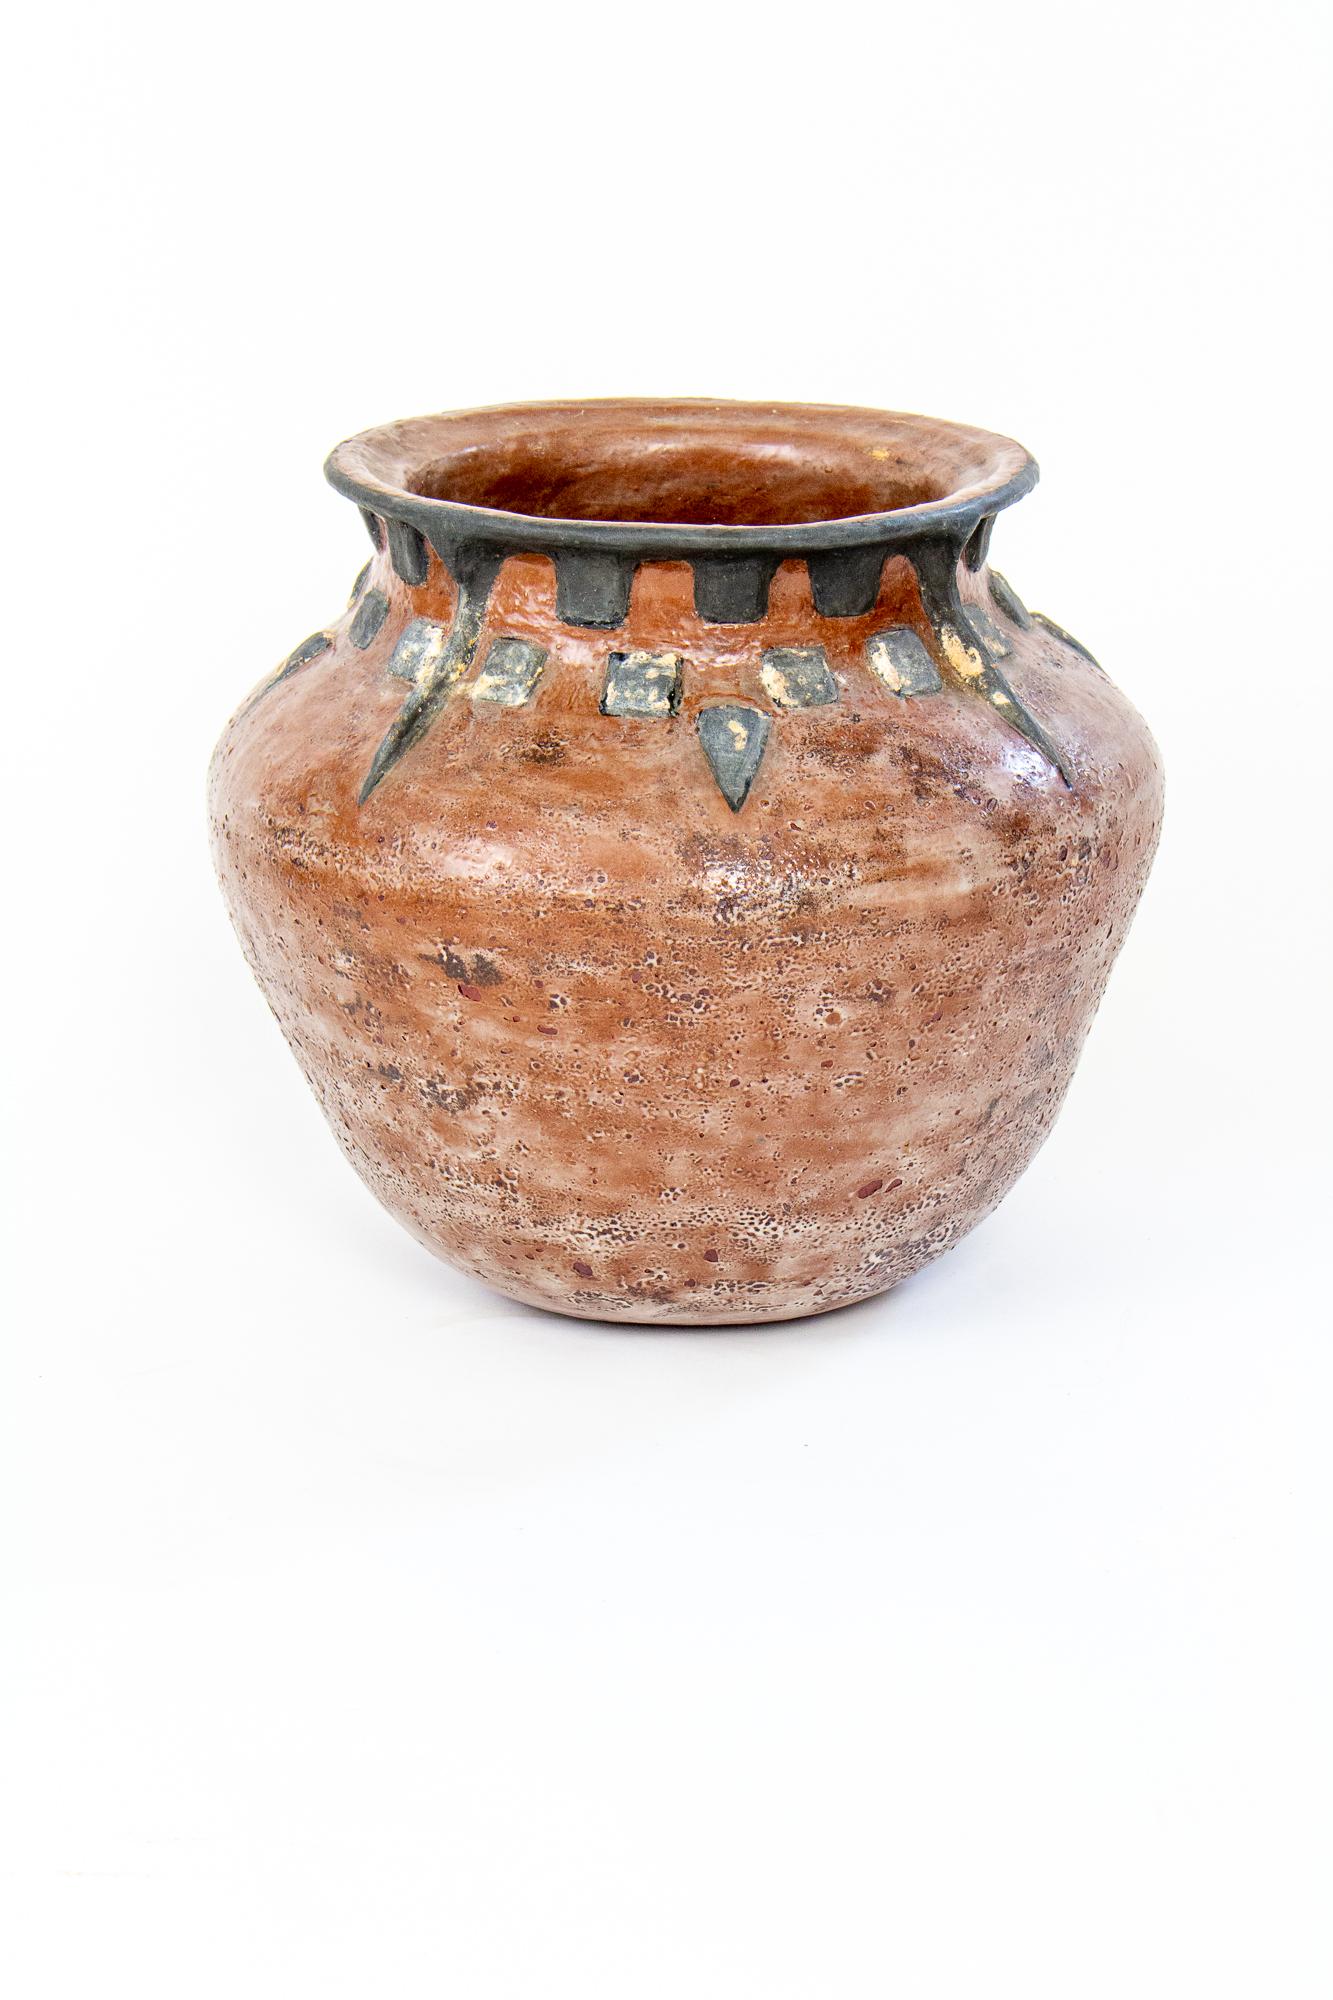 Rustic Vintage Ceramic Pot For Sale